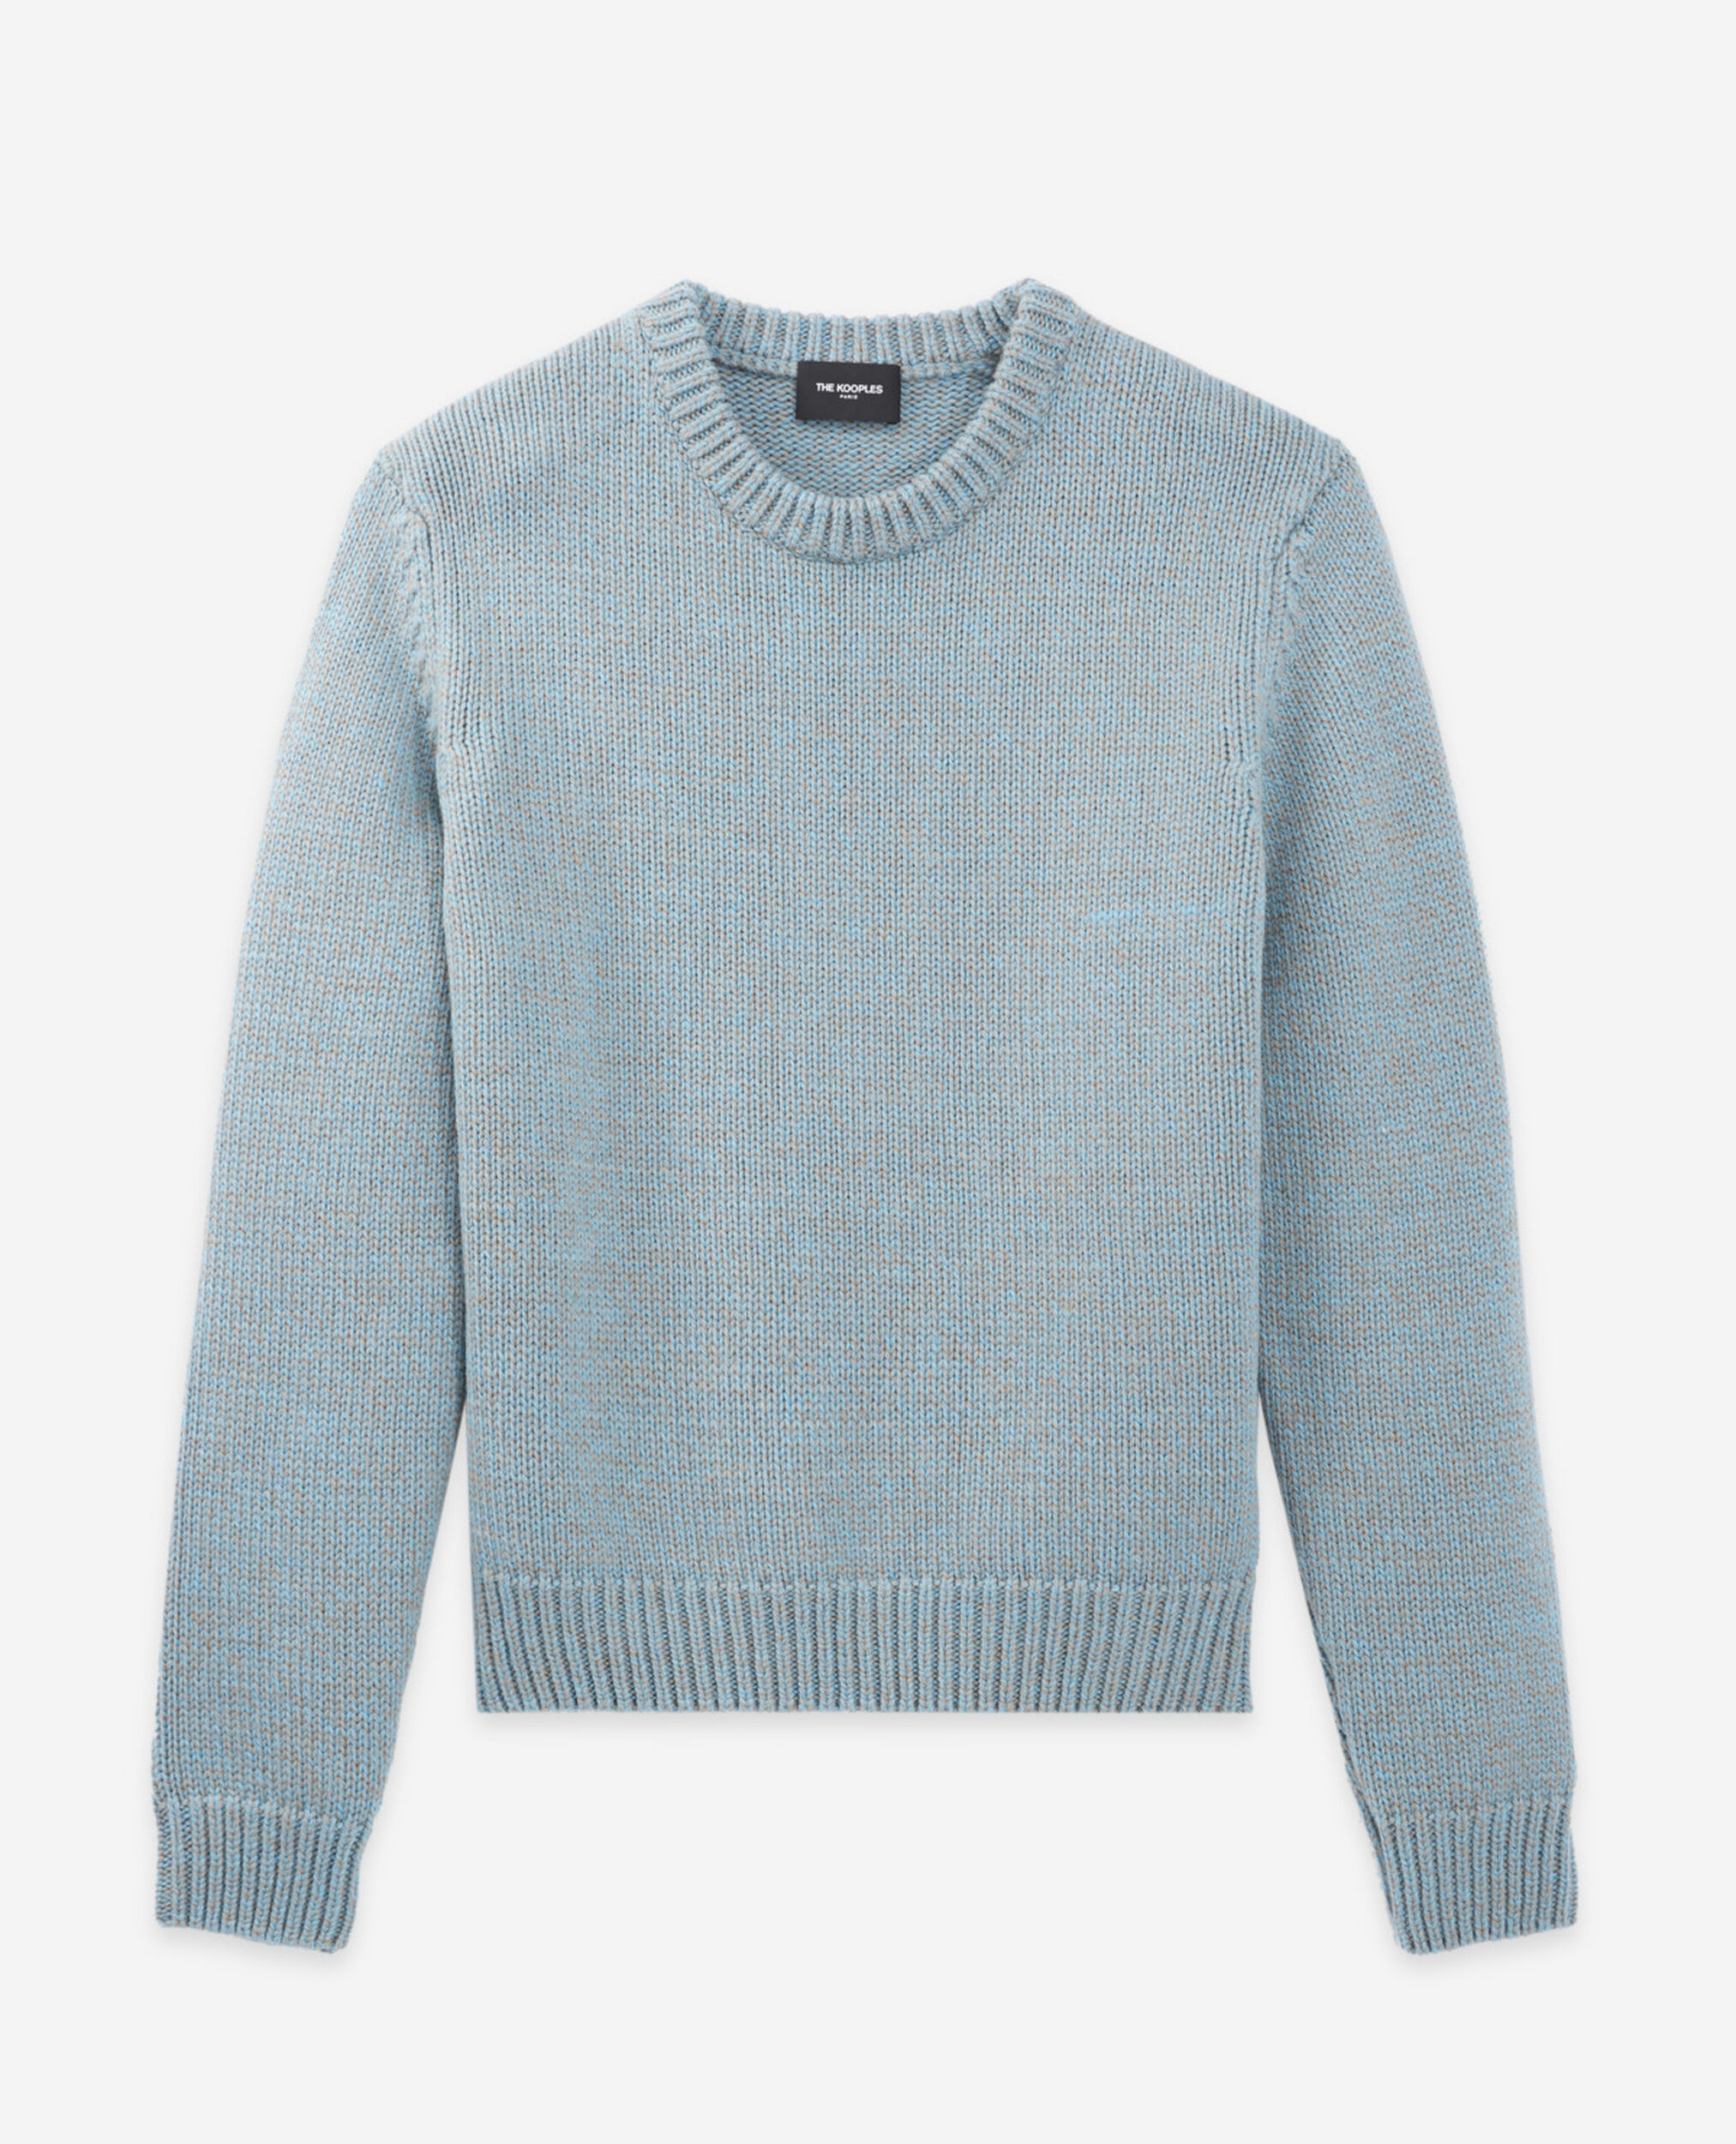 Light blue wool sweater w/ classic crew neck | The Kooples